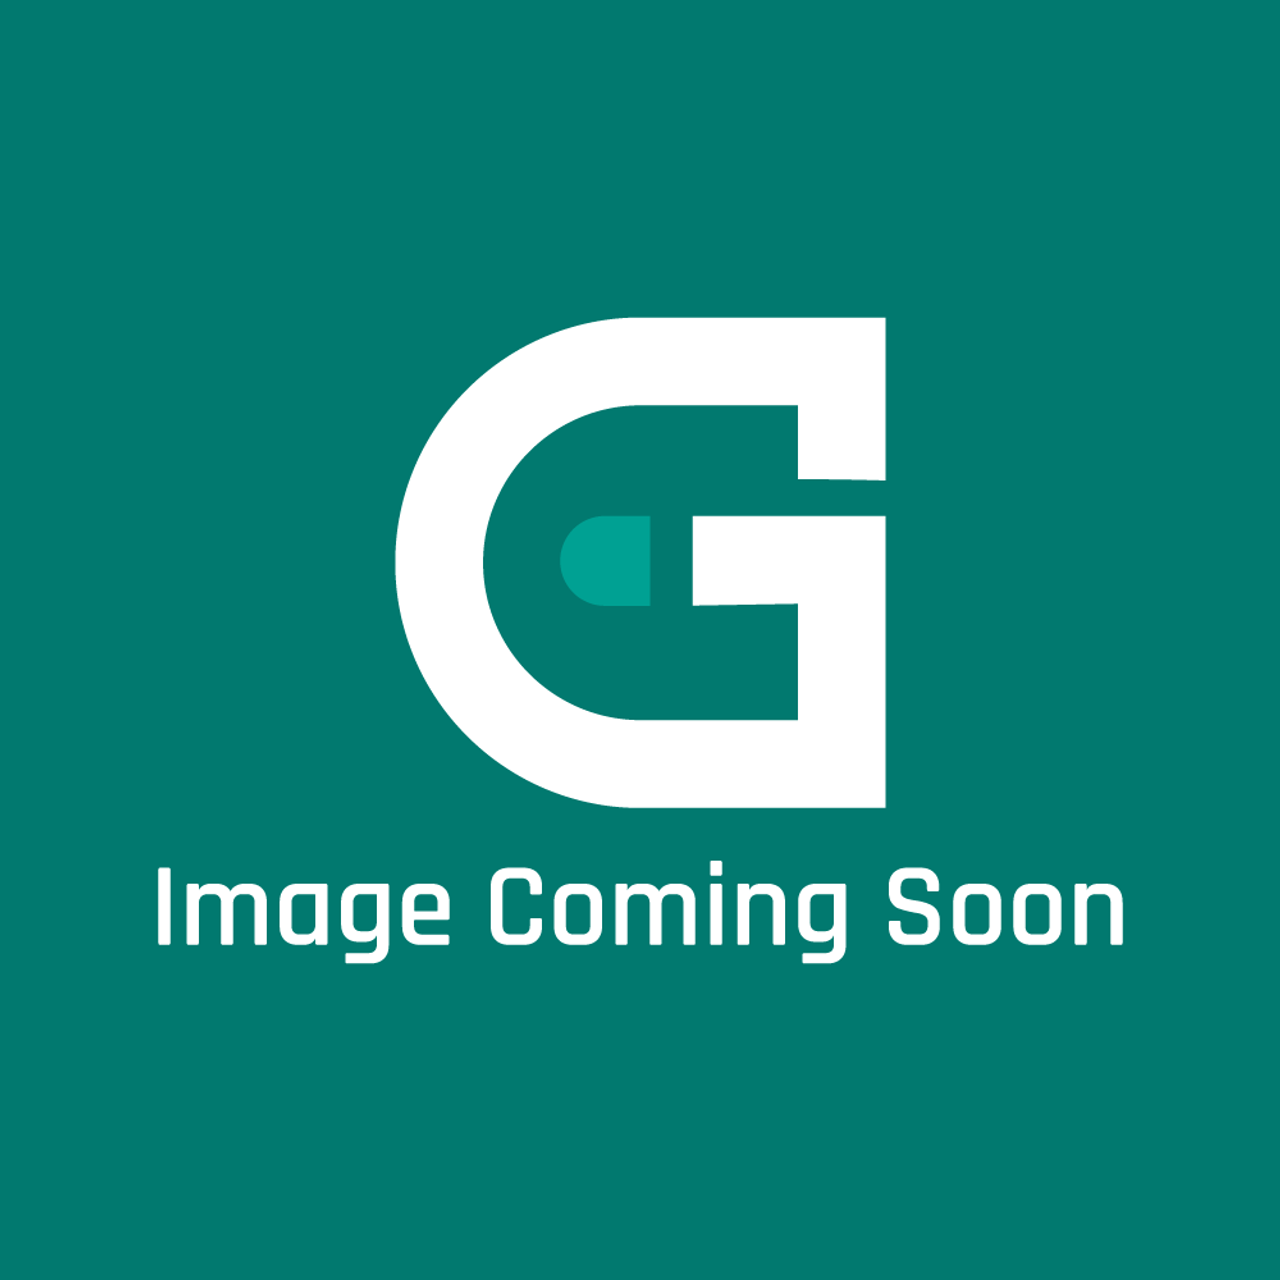 Groen Z086327 - Manifold, Boiler Assem - Image Coming Soon!